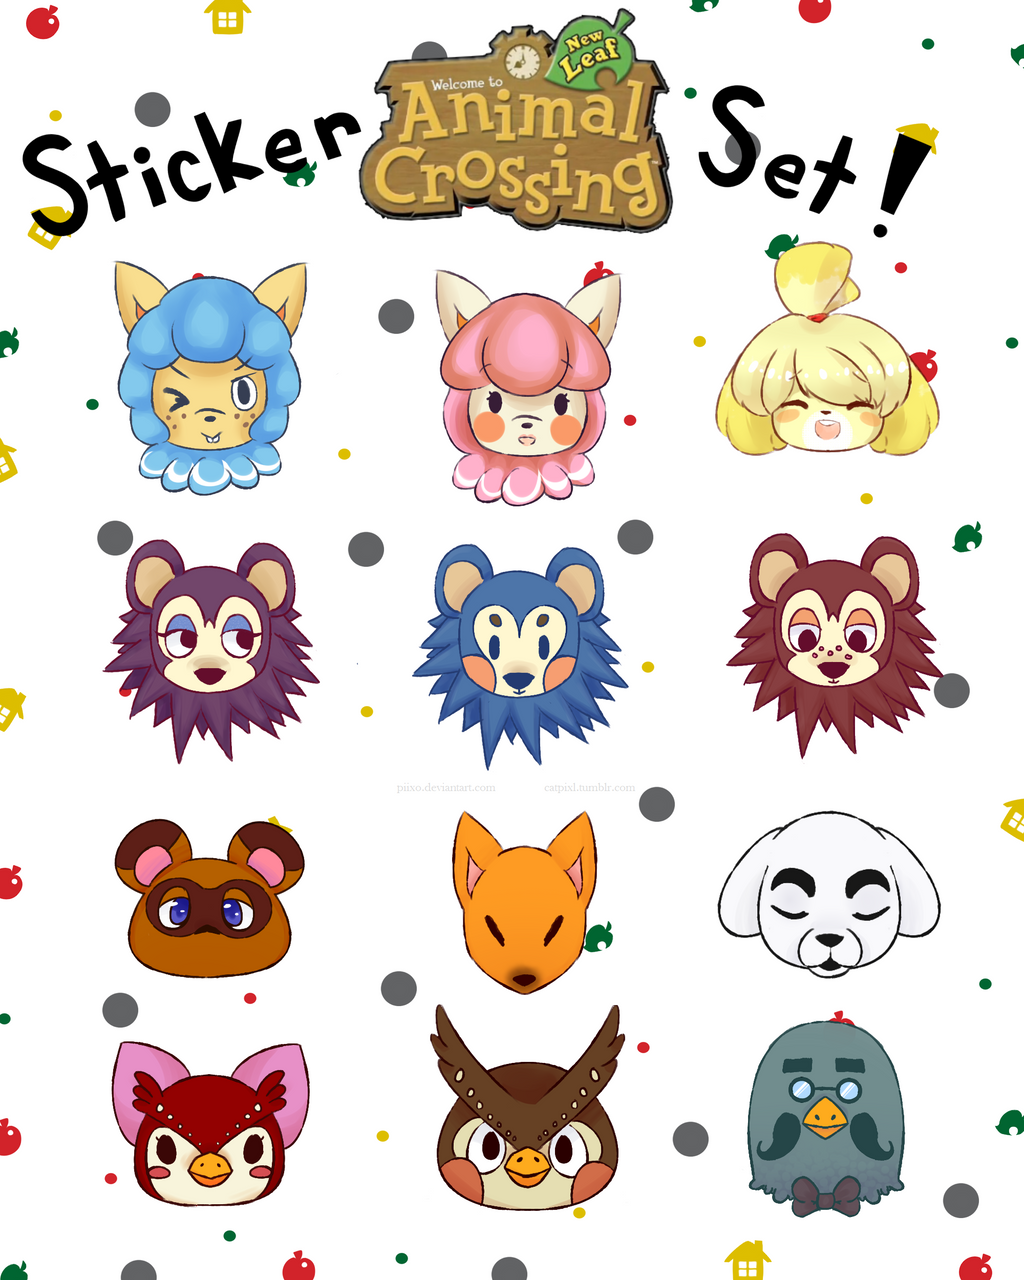 Animal Crossing Sticker Set by piixo on DeviantArt